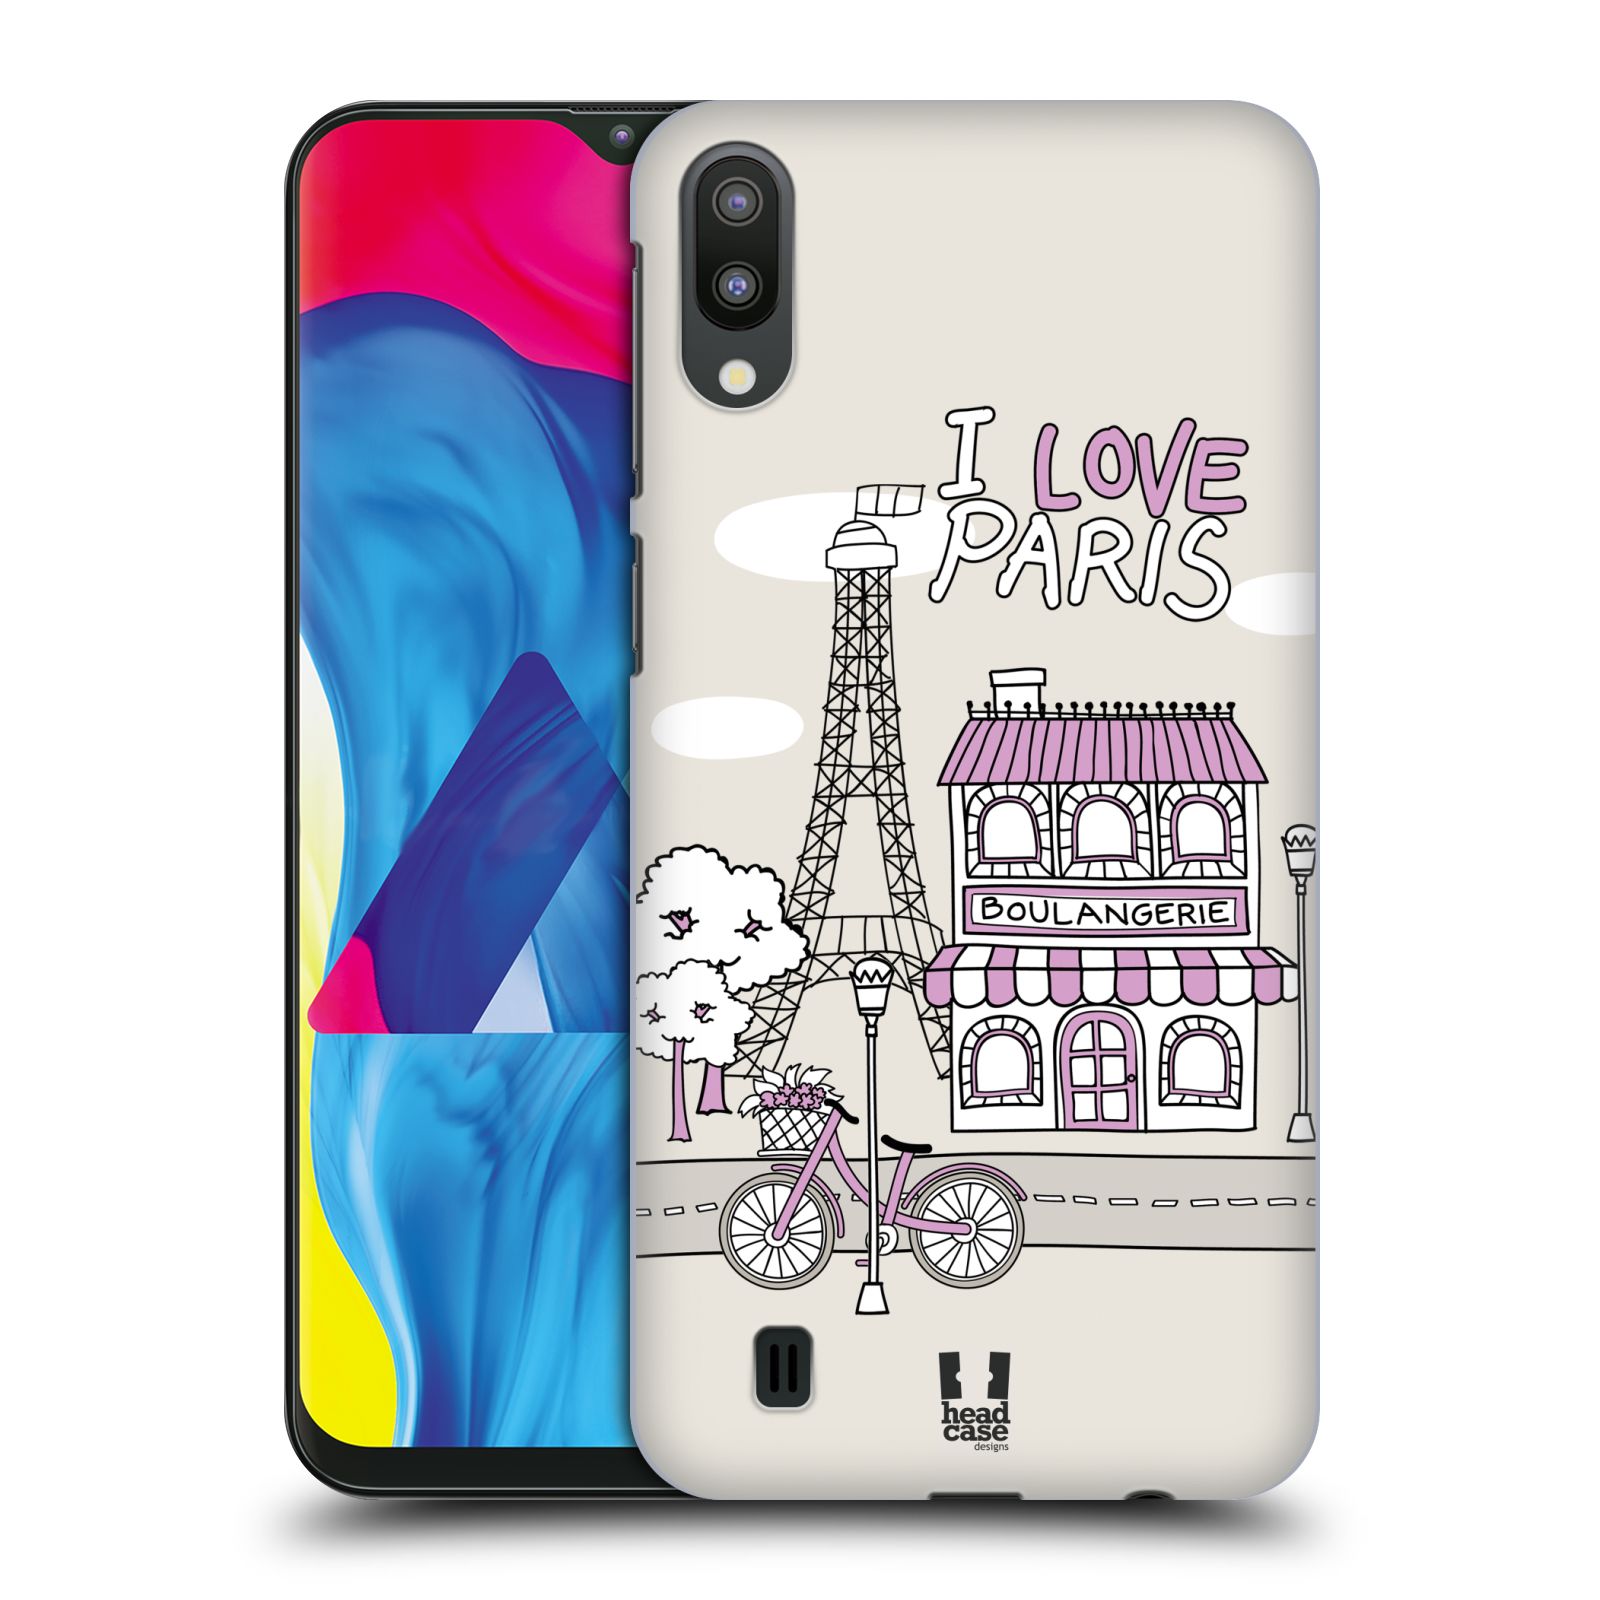 Plastový obal HEAD CASE na mobil Samsung Galaxy M10 vzor Kreslená městečka FIALOVÁ, Paříž, Francie, I LOVE PARIS